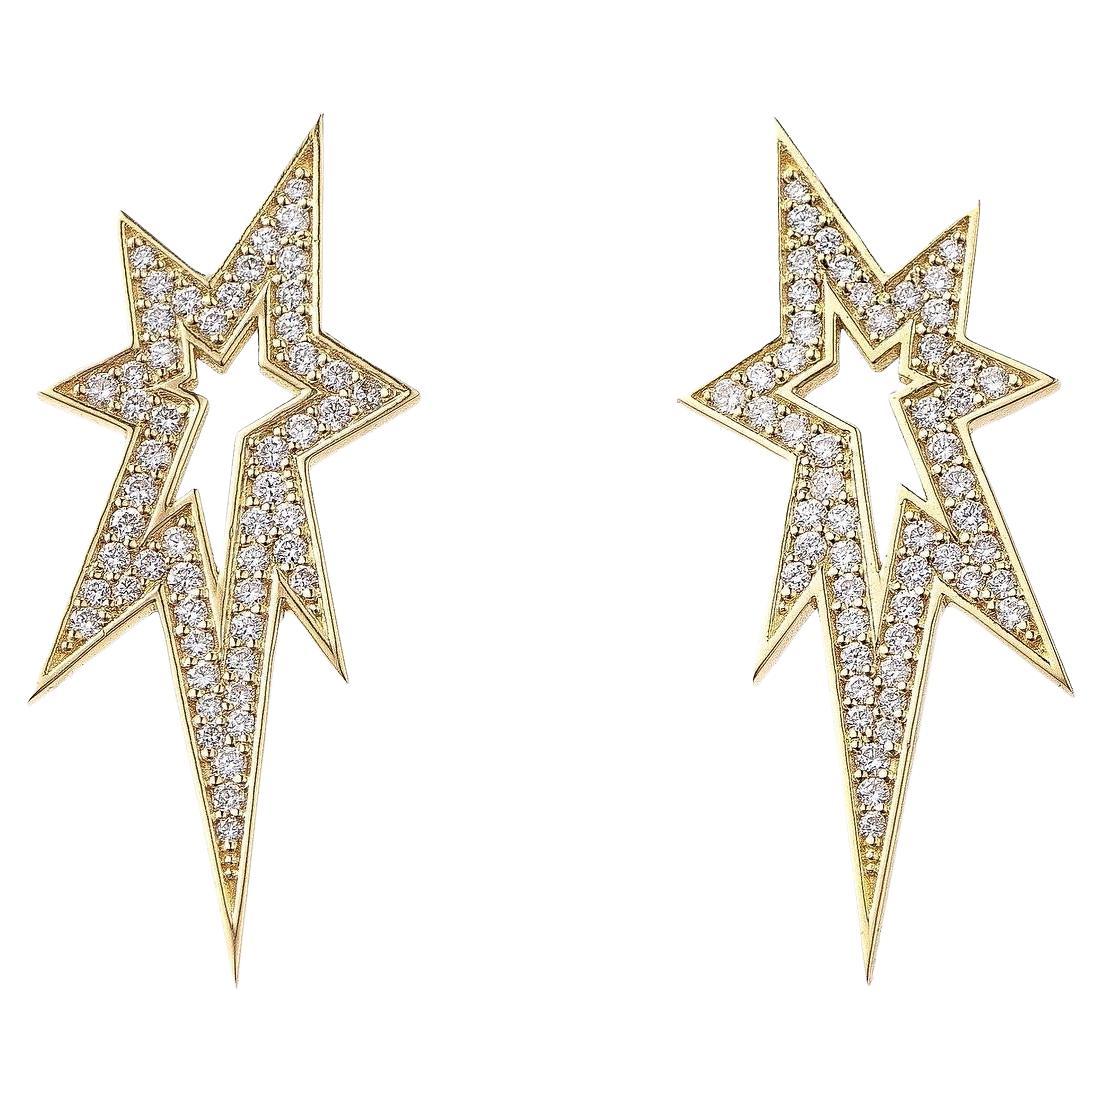 Maria Kotsoni Contemporary 18k Yellow Gold, Bang White Diamond Ear Studs